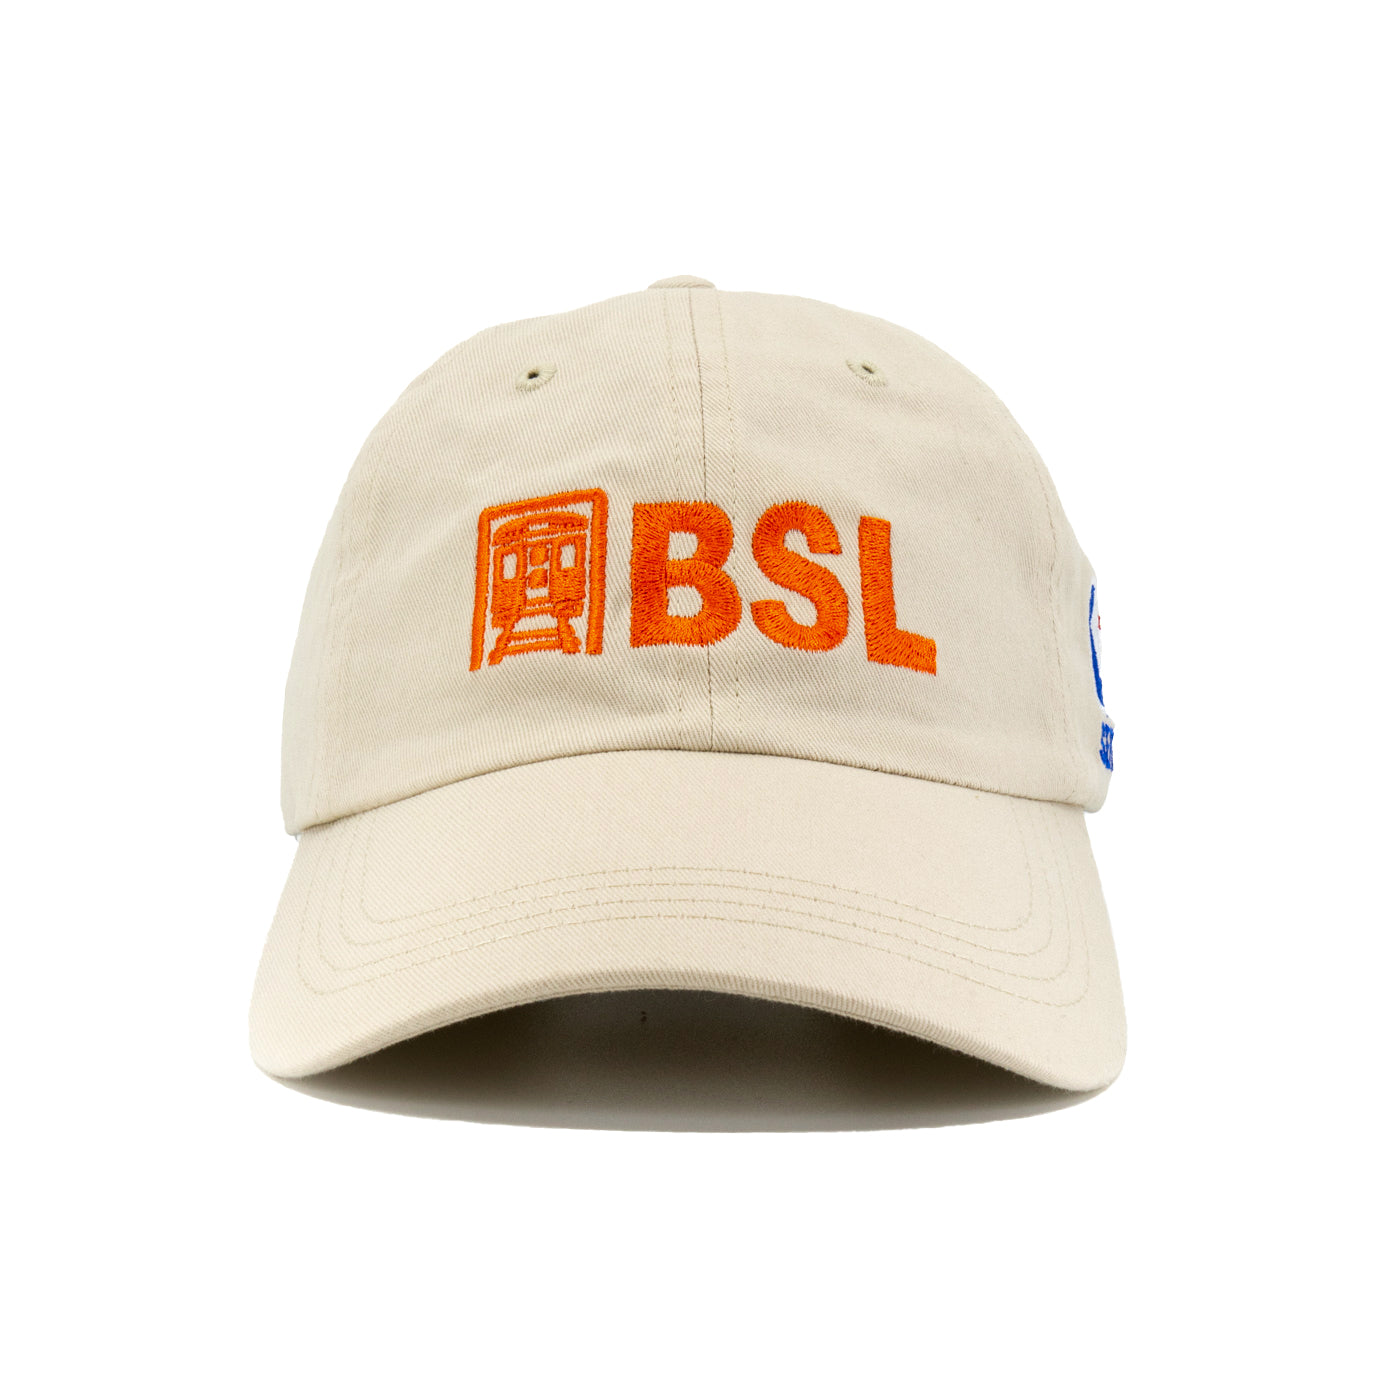 SEPTA Broad Street Line (BSL) Hat